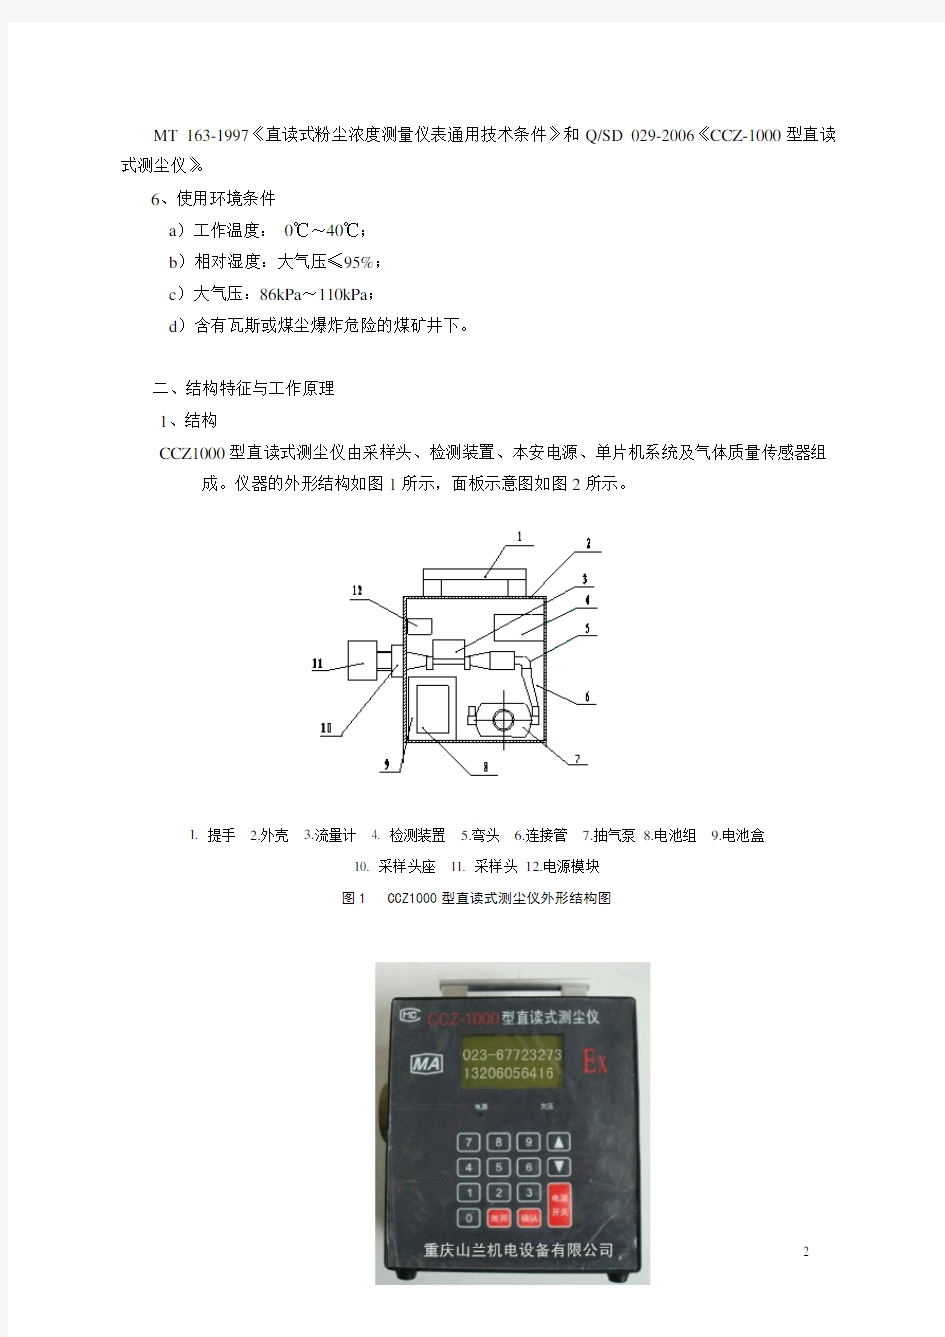 CCGZ-1000直读式测尘仪使用说明书